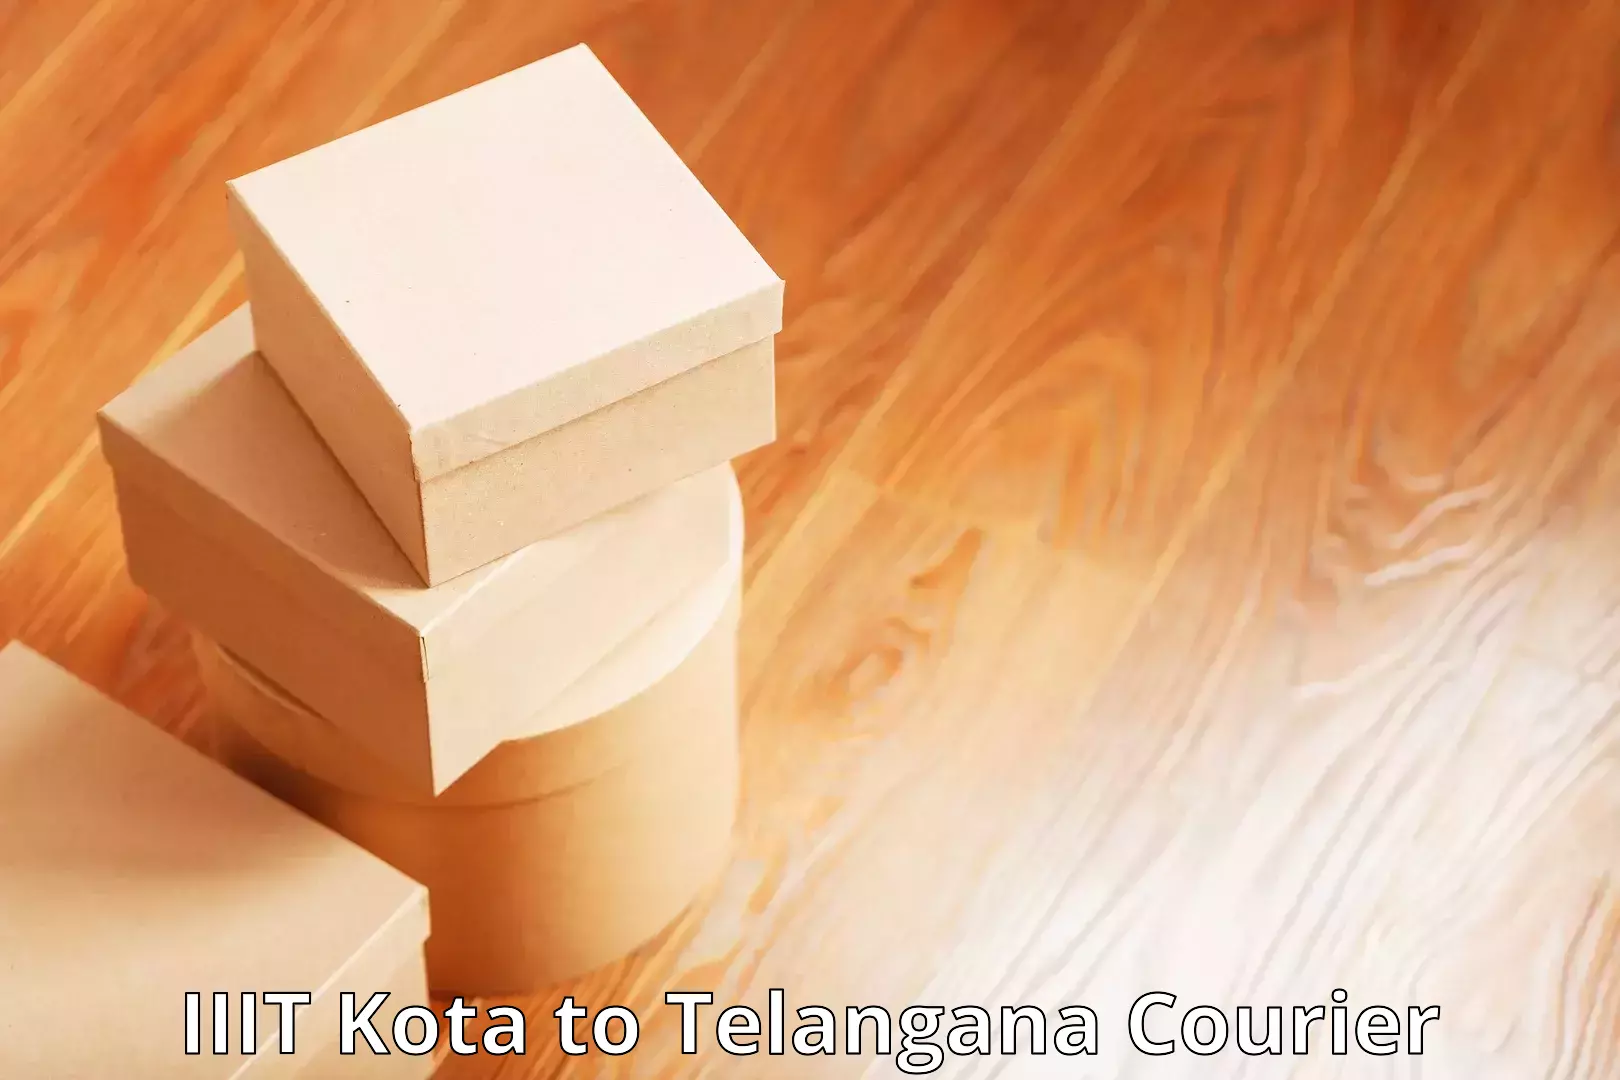 Reliable courier service IIIT Kota to Karimnagar